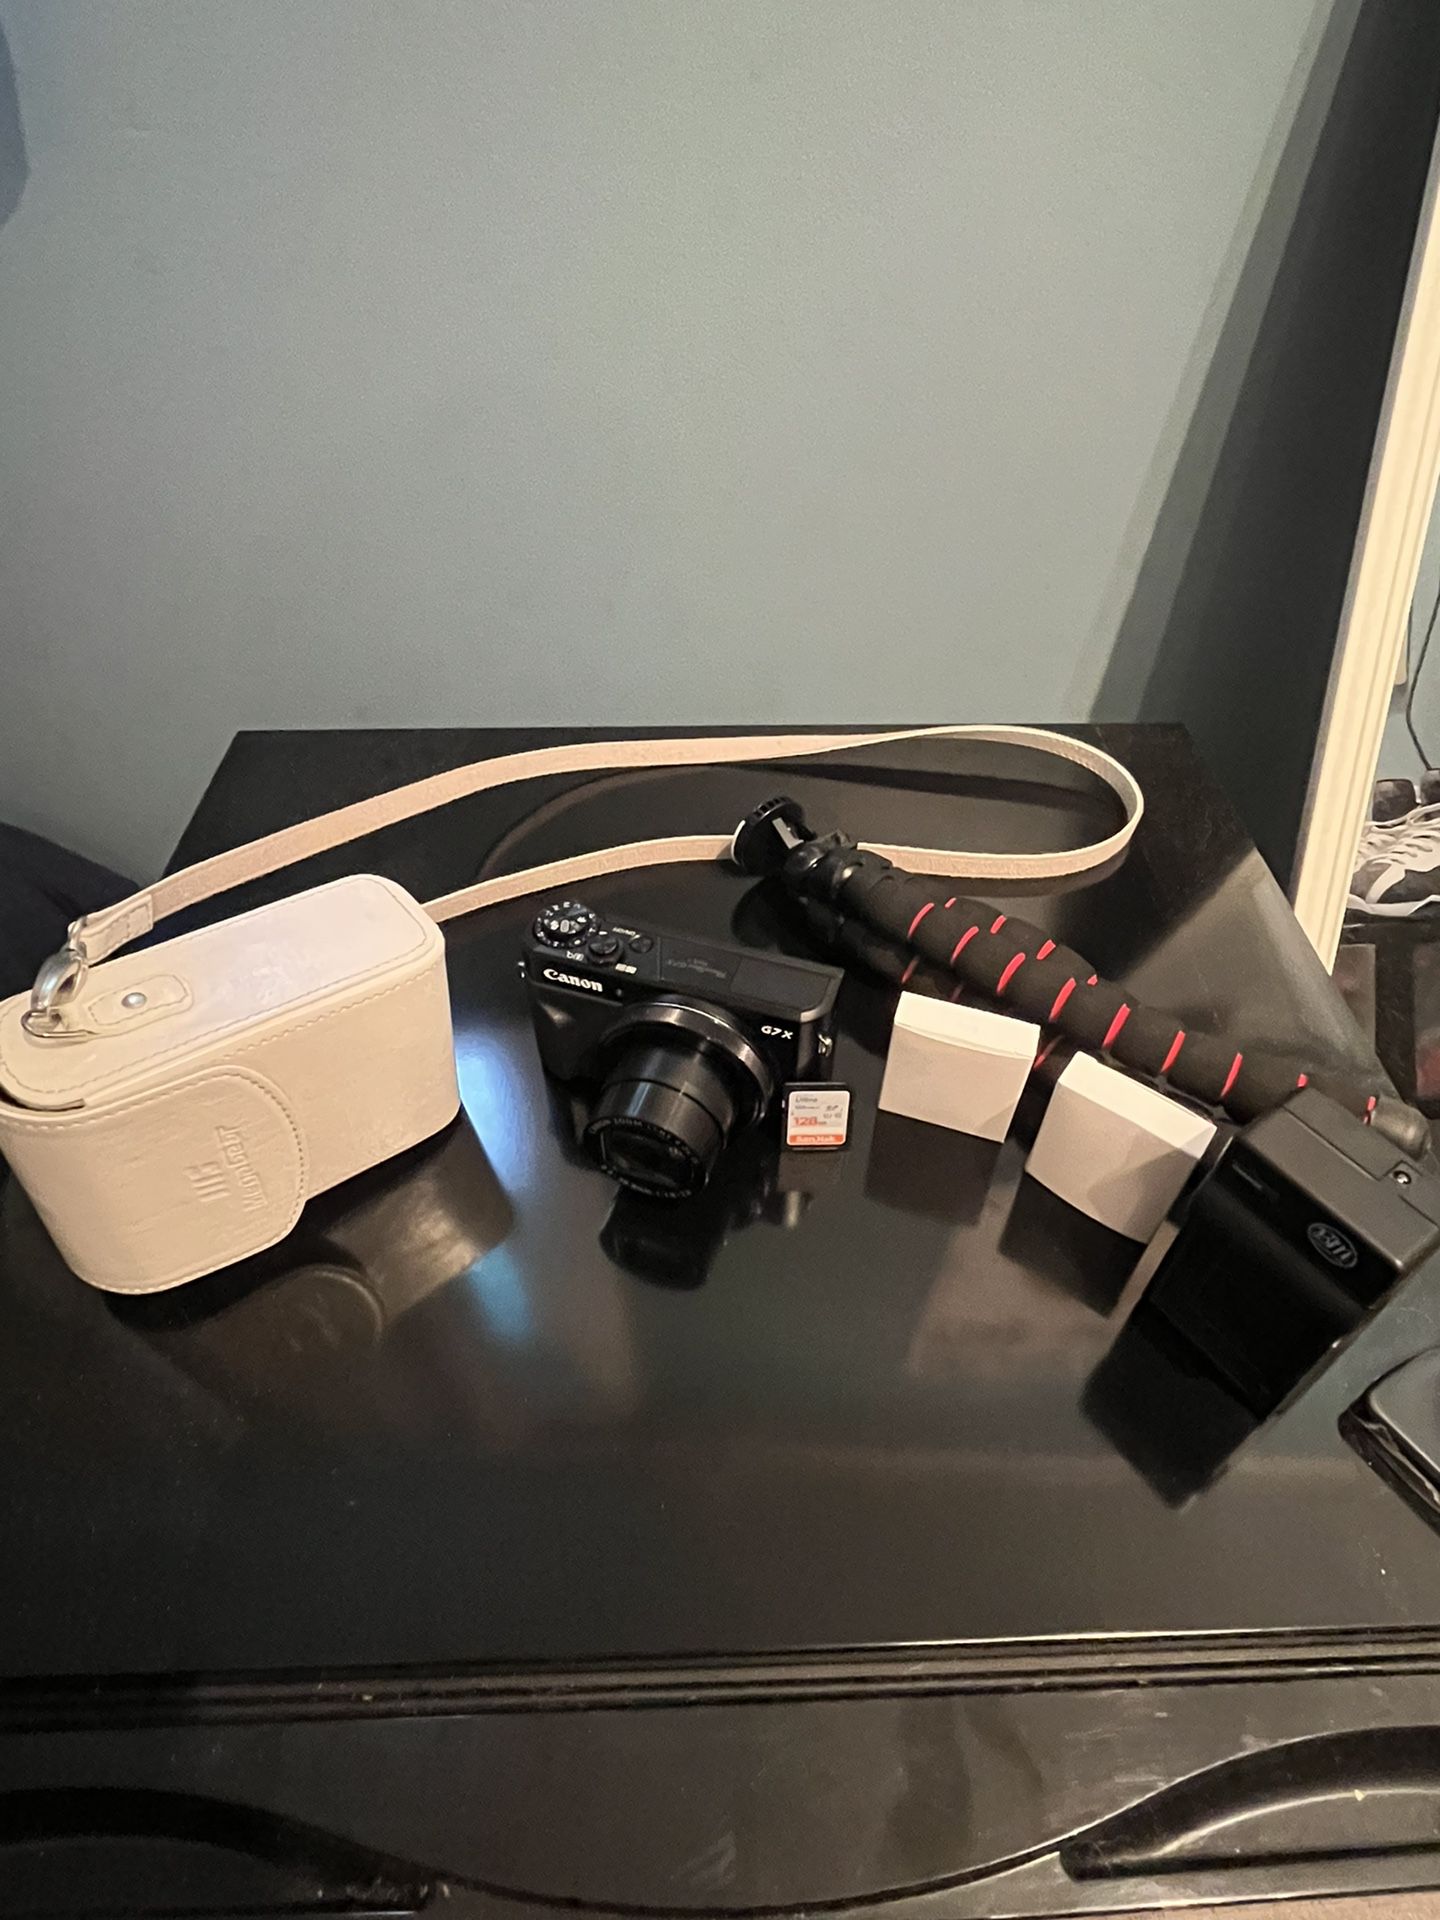 Canon PowerShot G7X Mark II 20.1 MP Compact Digital Camera - Black BUNDLE